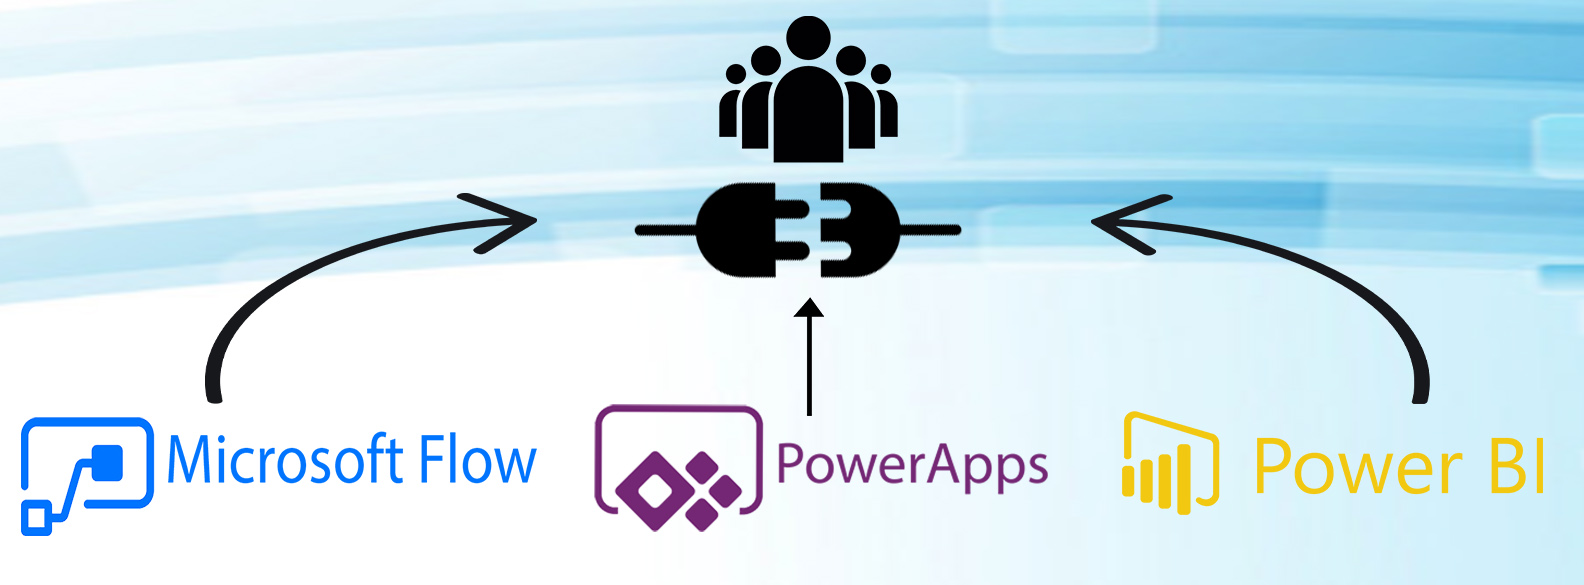 Microsoft Flow, PowerApps, and Power BI logos